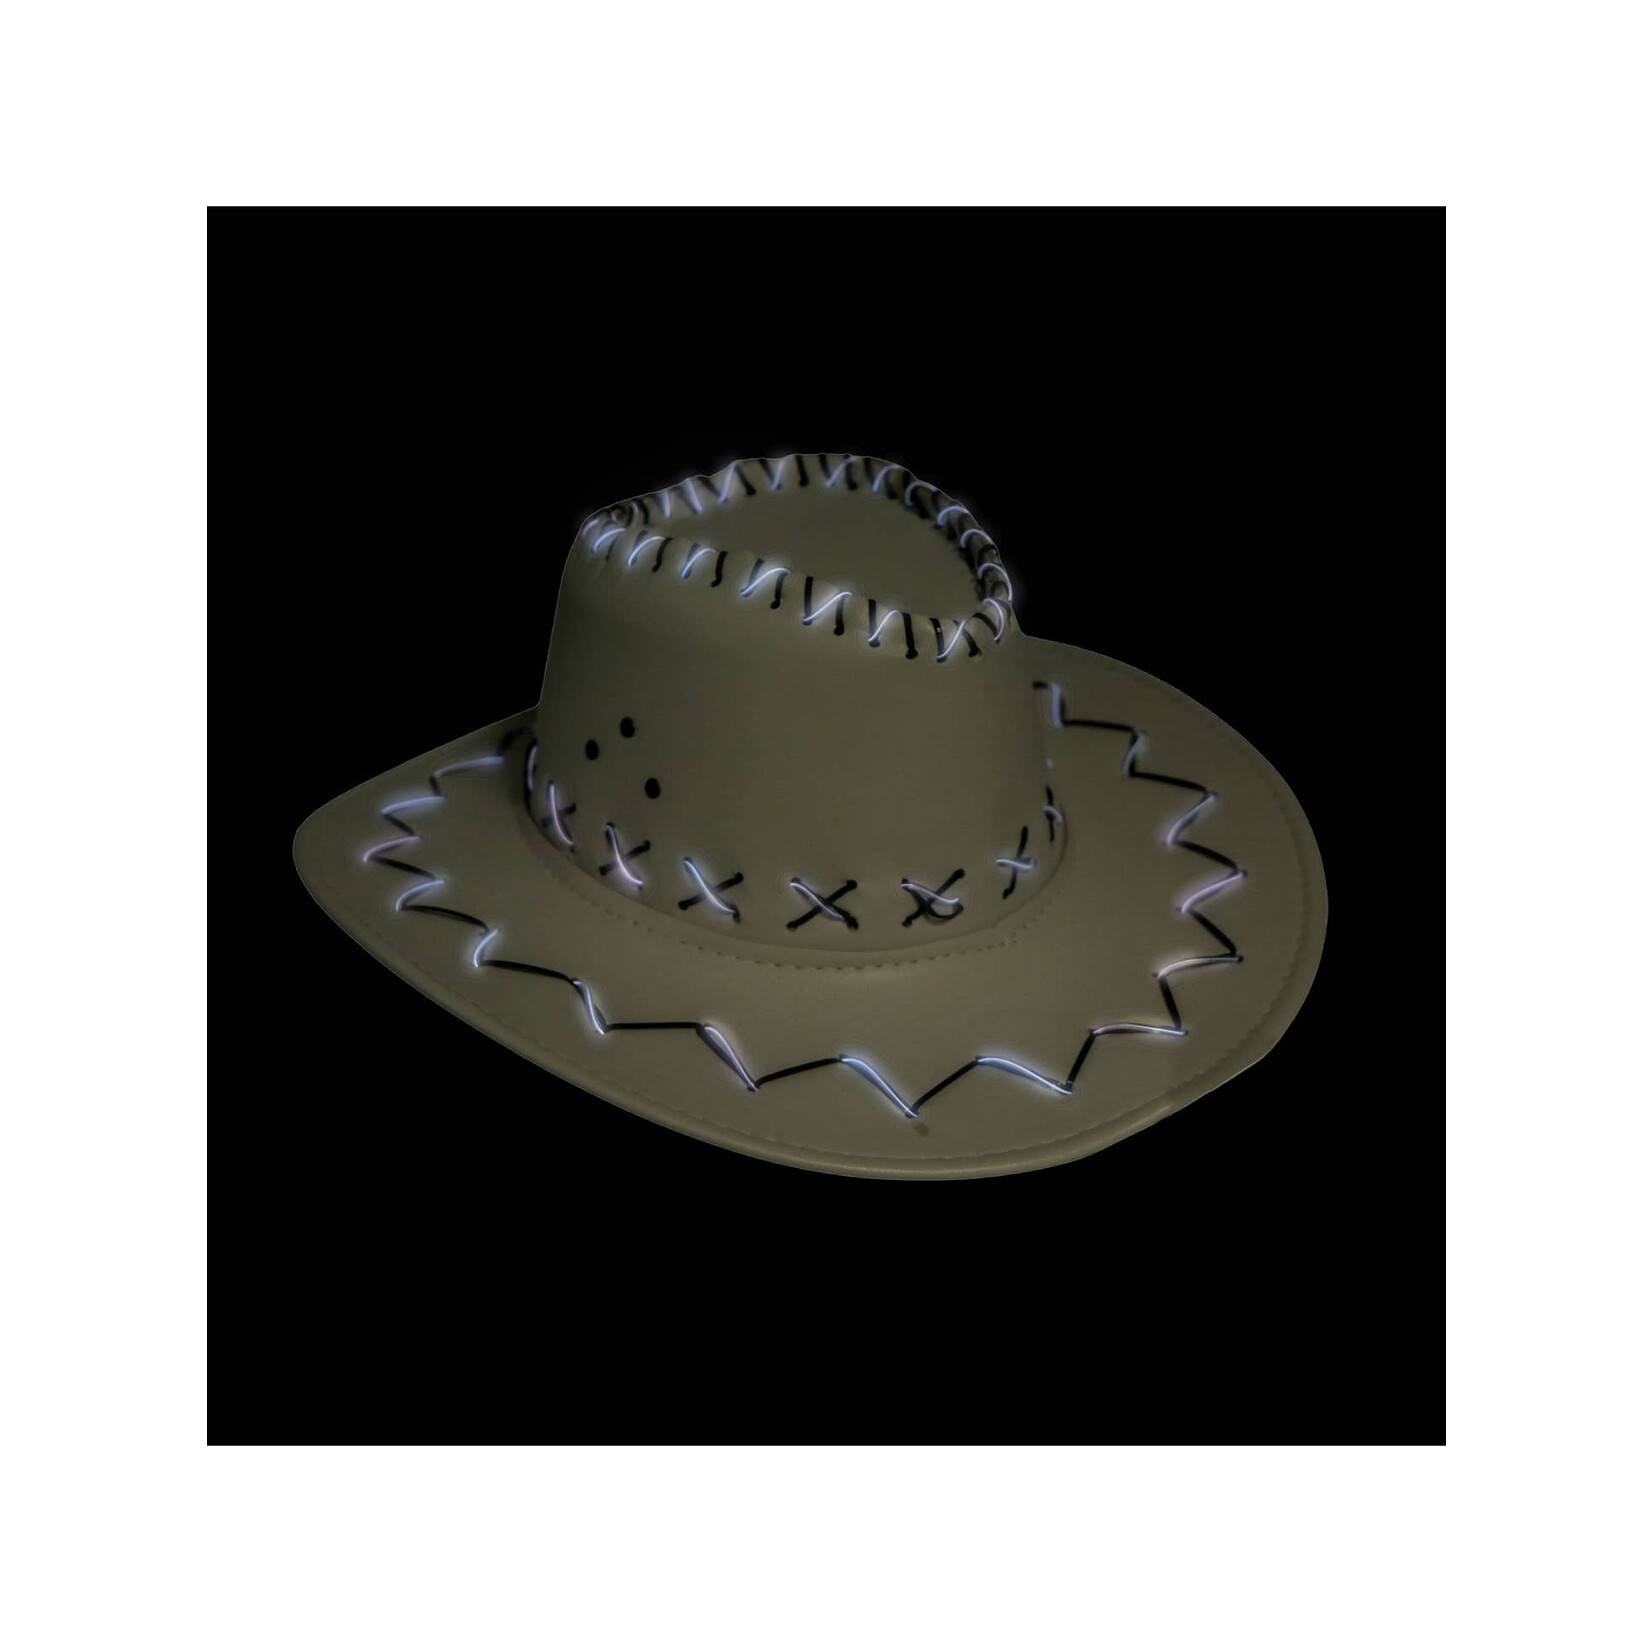 Western Fashion Leatherette Light Up Cowboy Hat